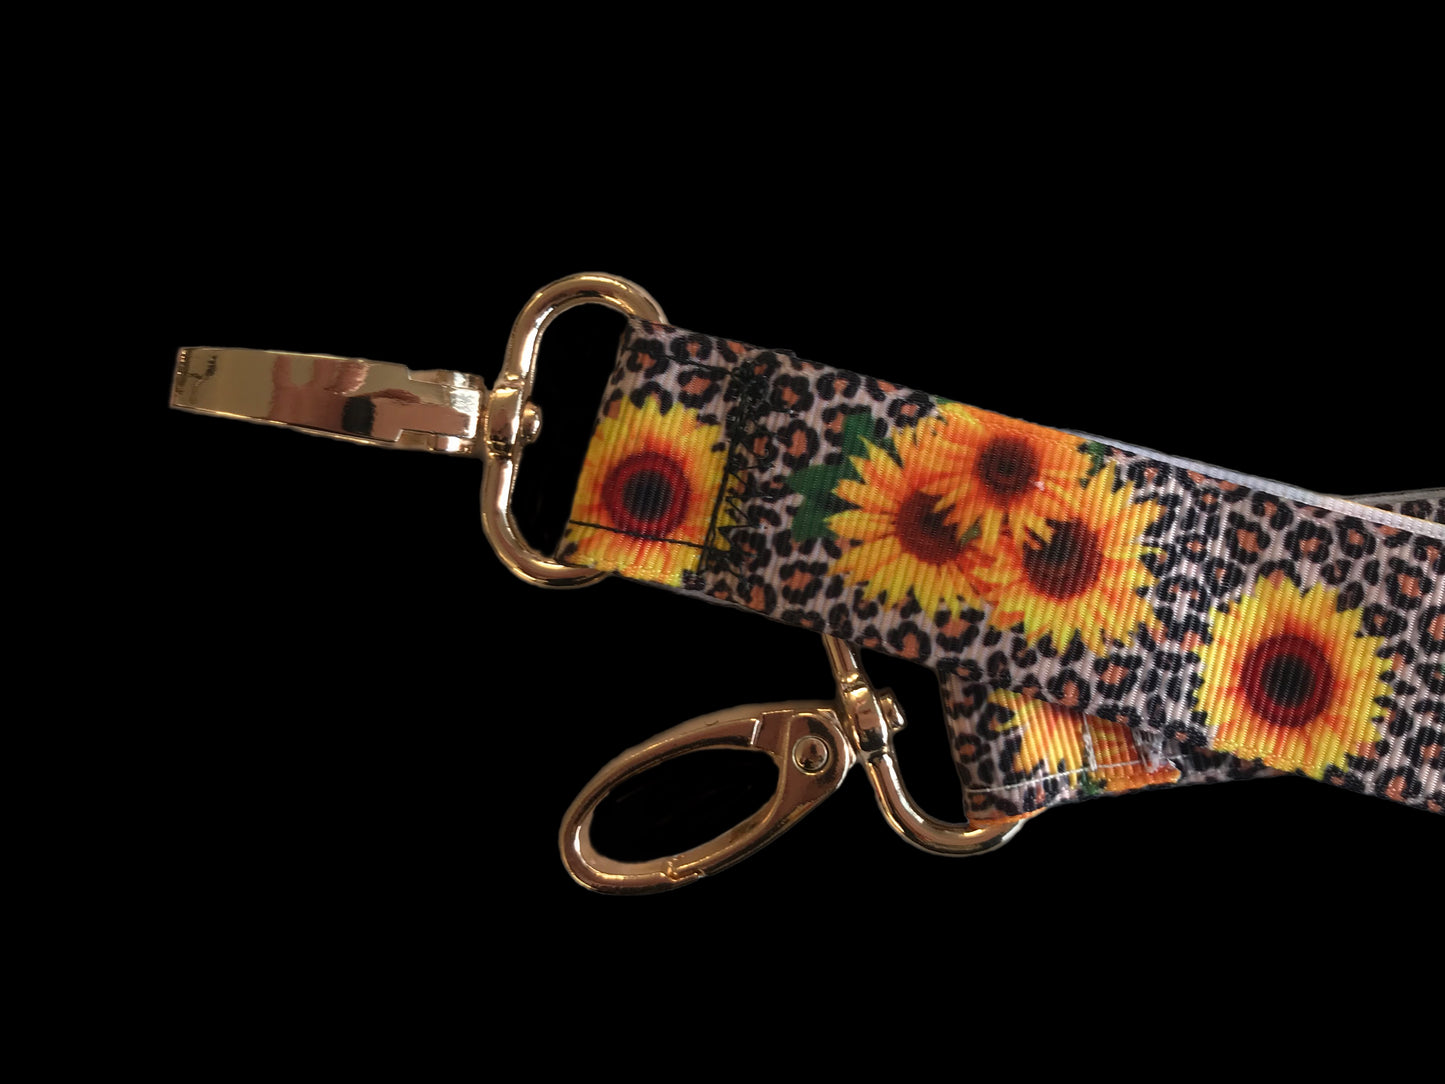 Keyring lanyard leopard print and sunflowers design gift birthday idea